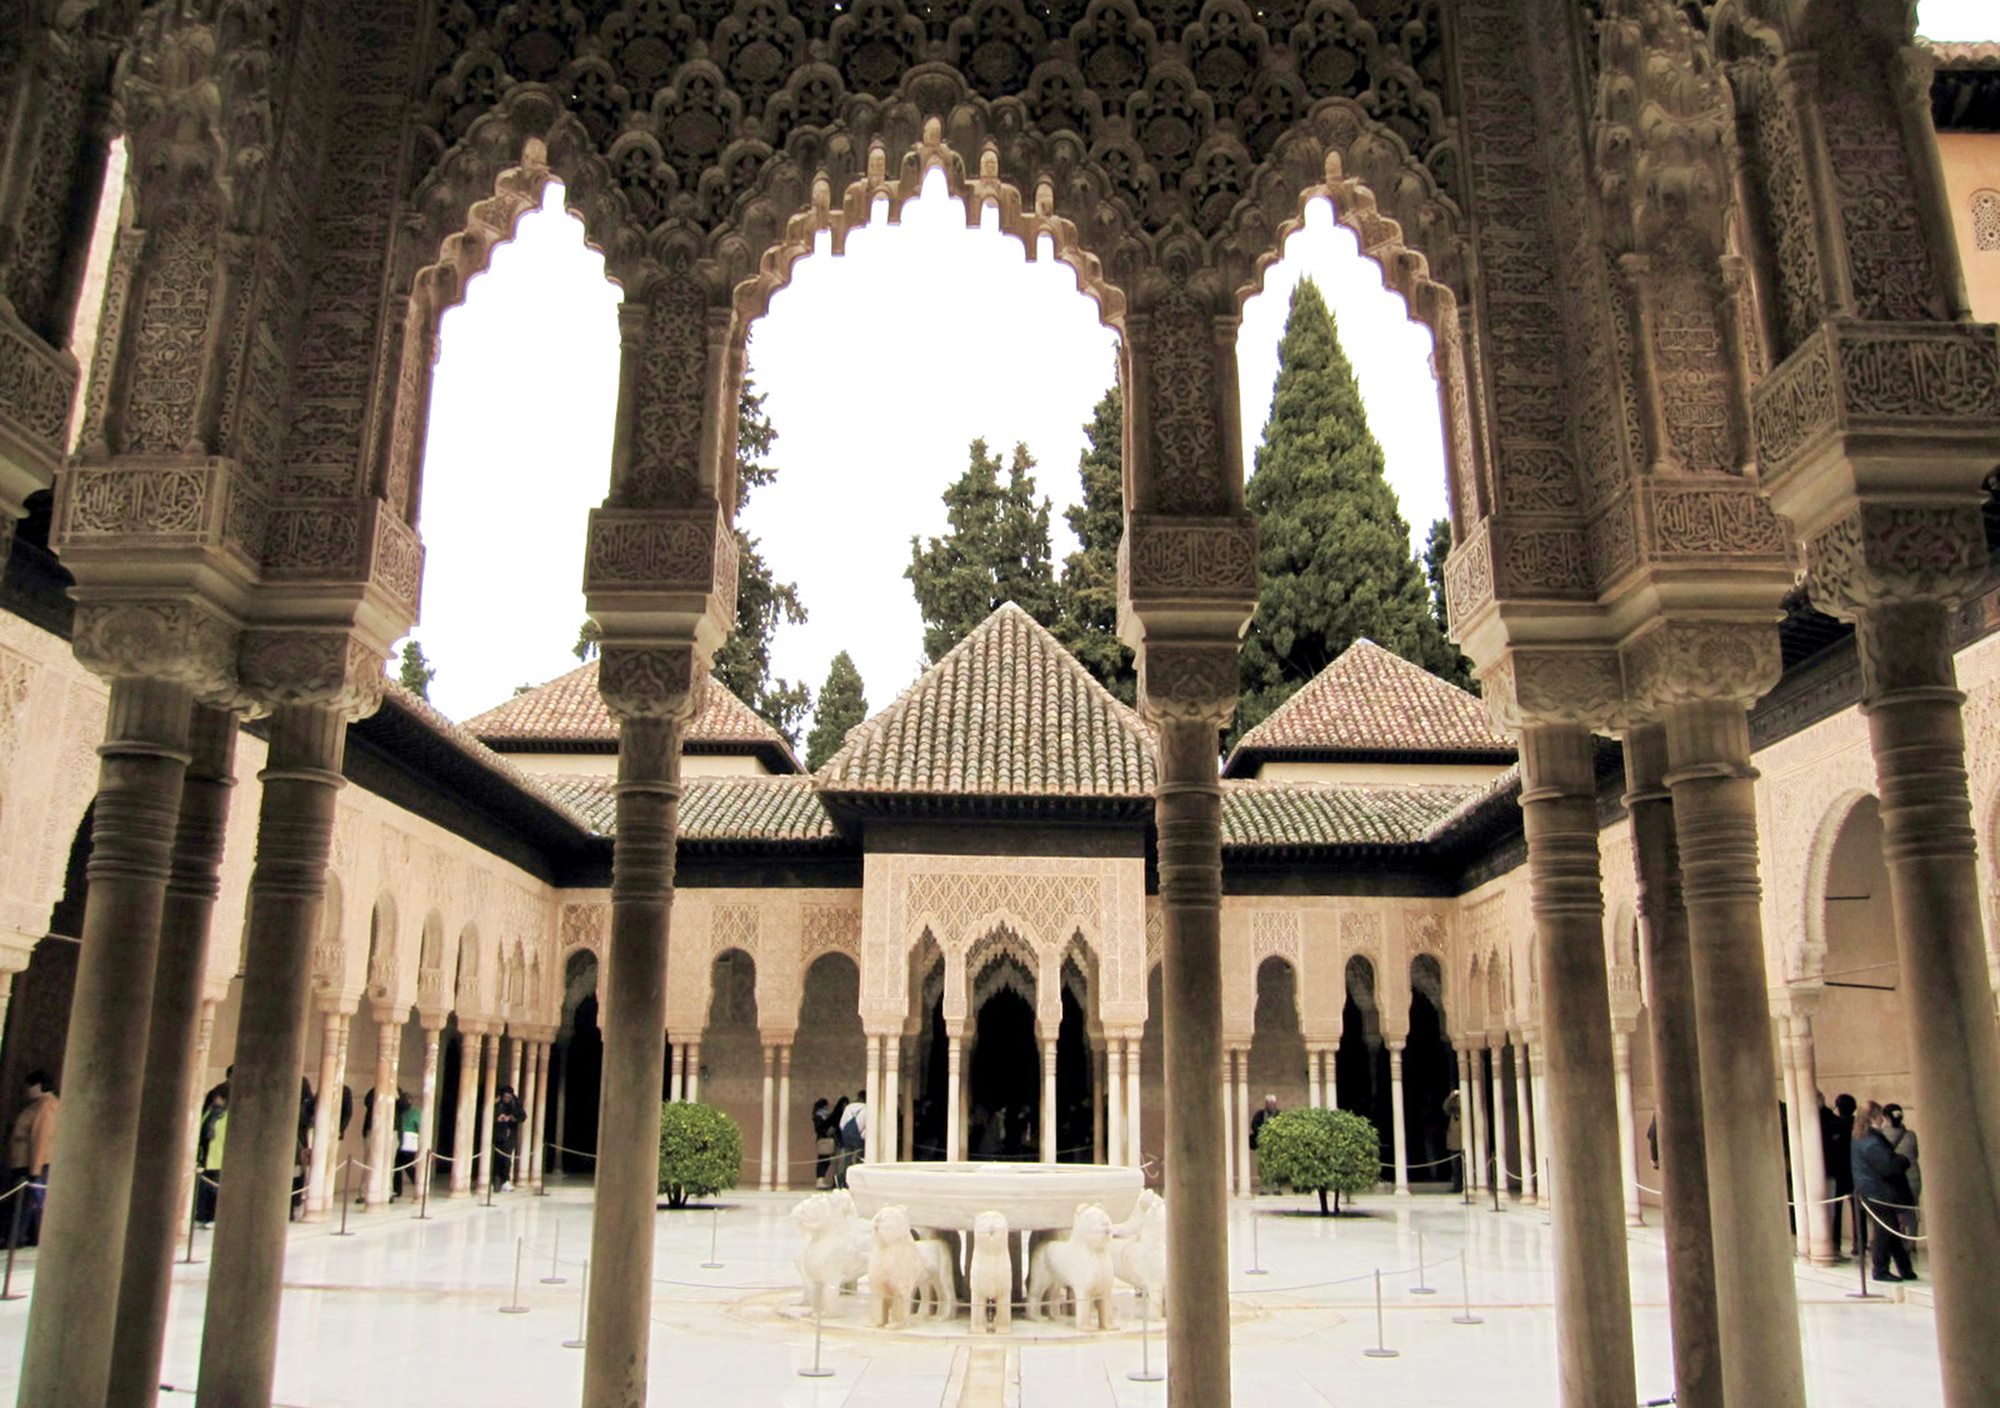 Visita diurna a la Alhambra en grupo reducido